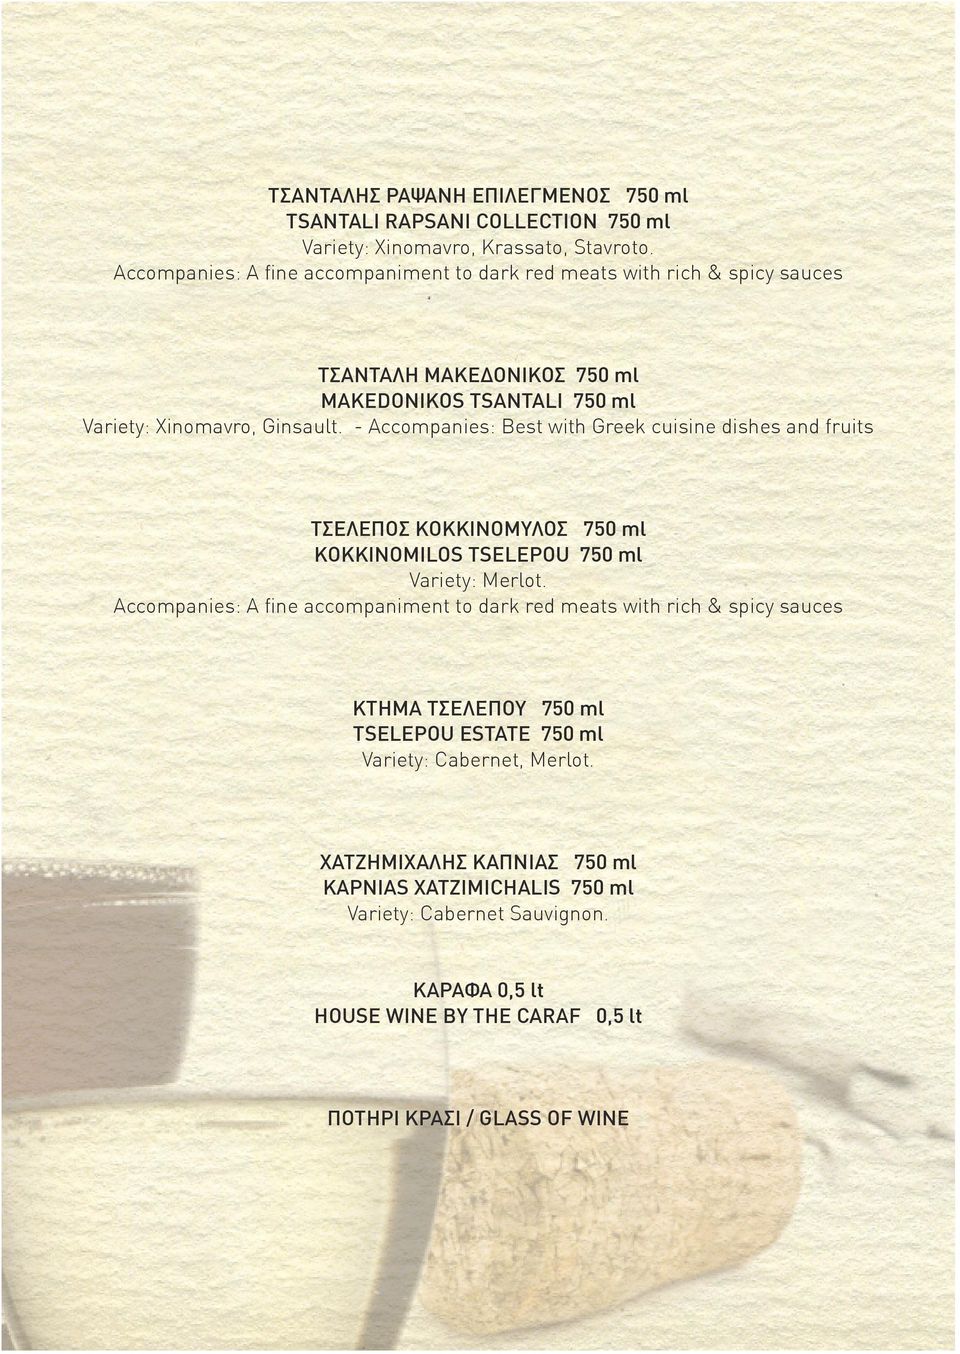 - Accompanies: Best with Greek cuisine dishes and fruits ΤΣΕΛΕΠΟΣ ΚΟΚΚΙΝΟΜΥΛΟΣ 750 ml KOKKINOMILOS TSELEPOU 750 ml Variety: Merlot.